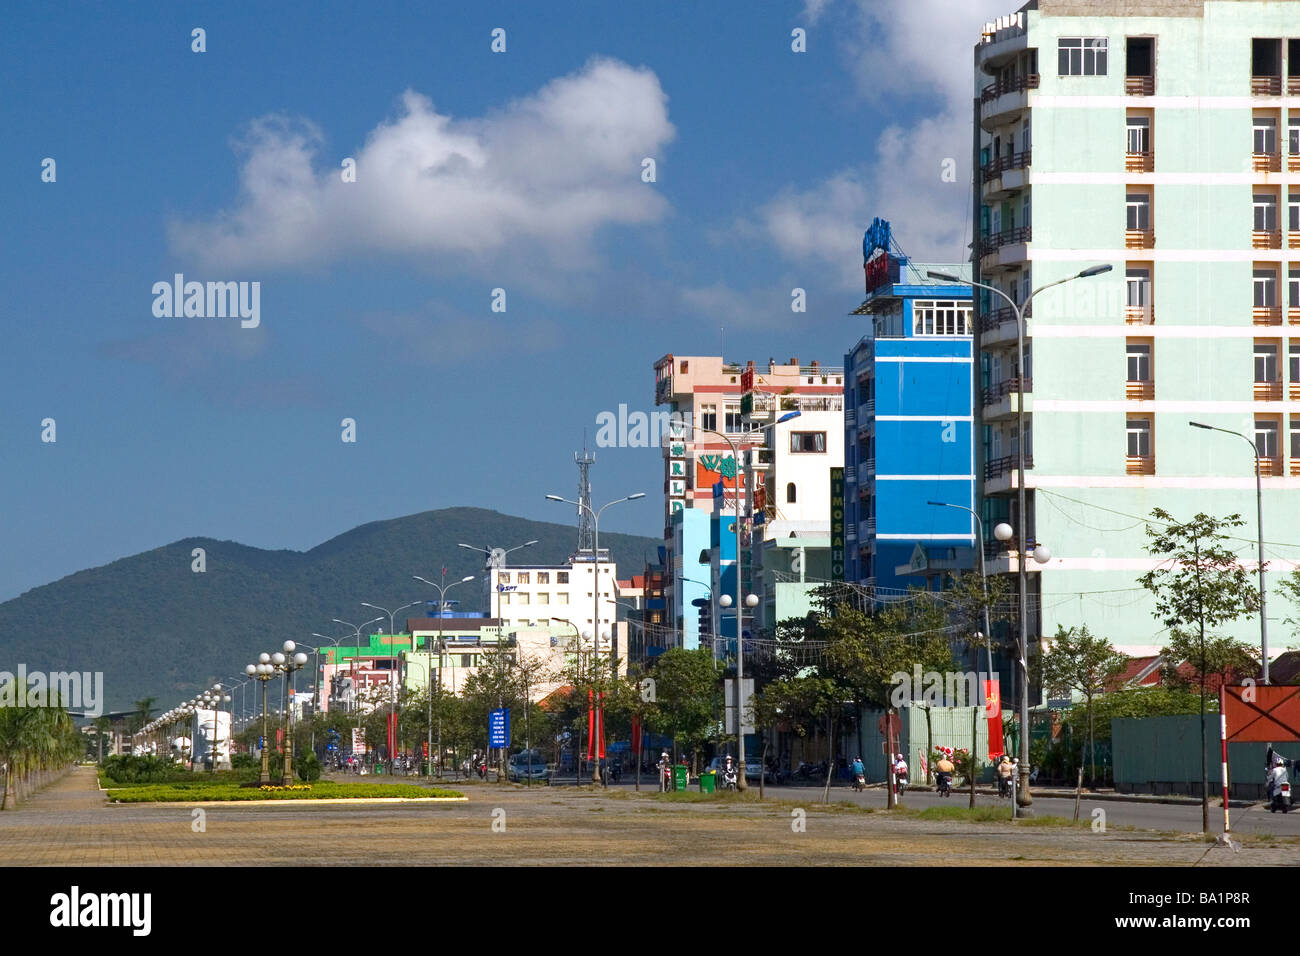 High rise buildings in the port city of Da Nang Vietnam Stock Photo